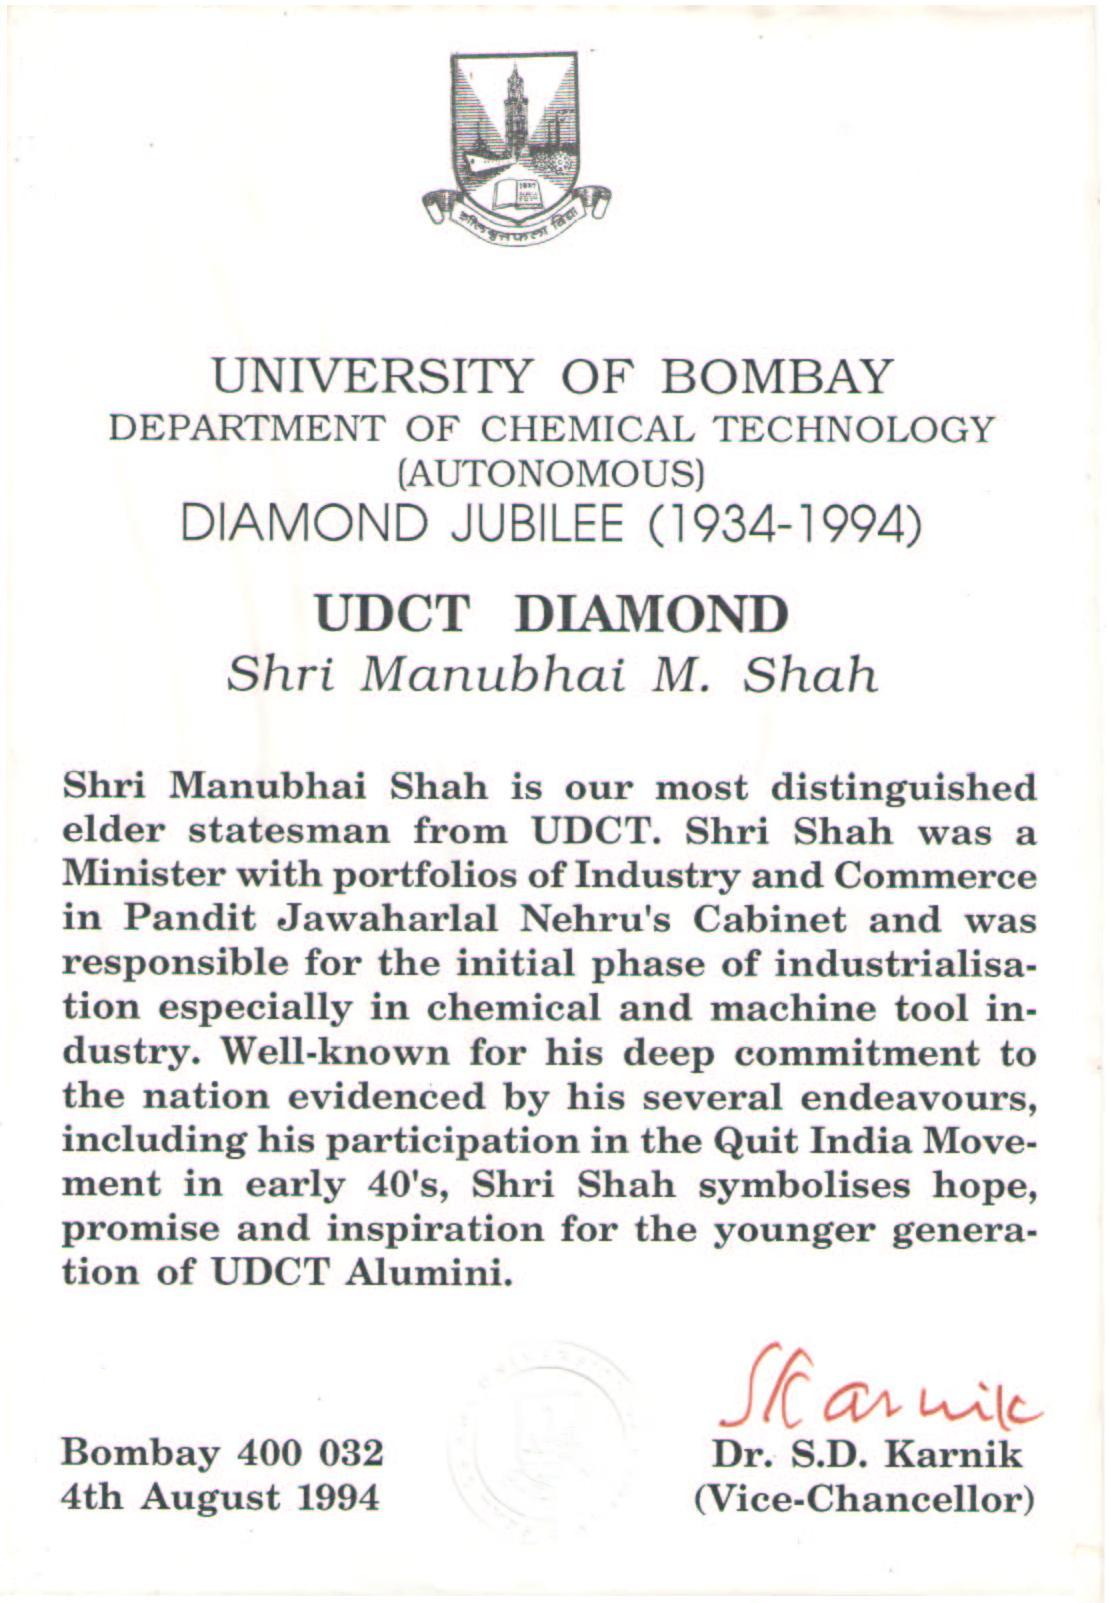 Manubhai felicitated as UDCT Diamond in 1994